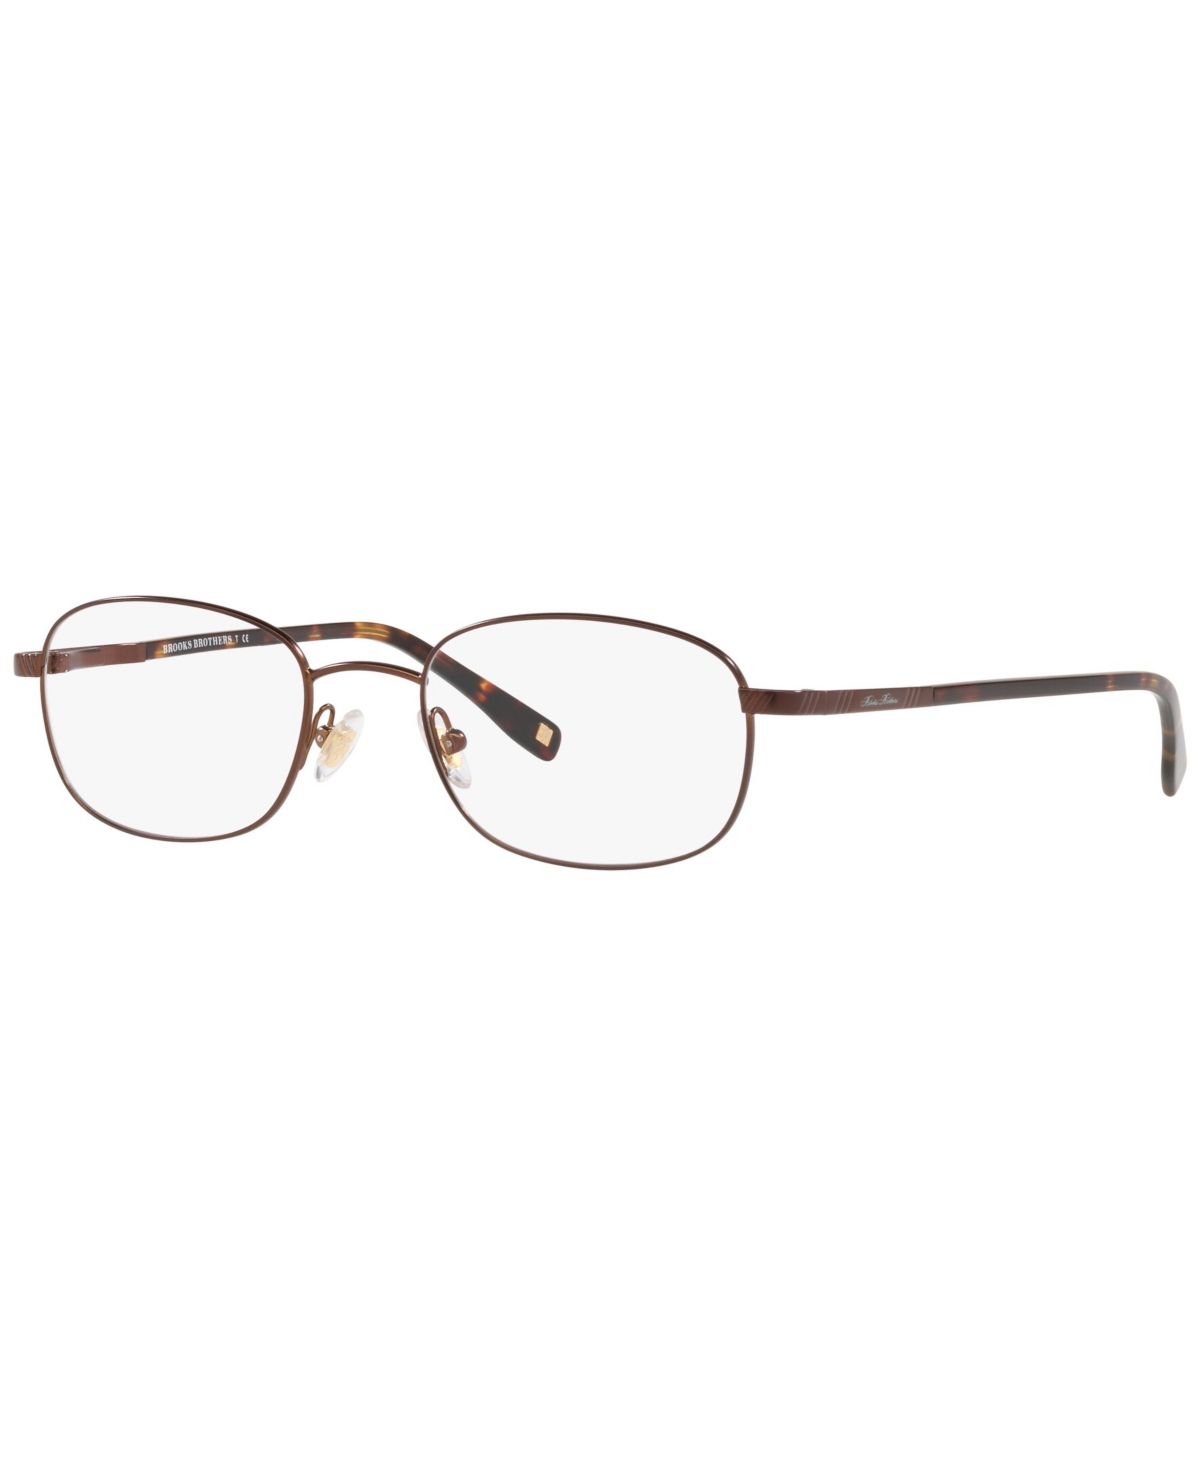 Men's Eyeglasses, Bb 363 50 - Dark Brown